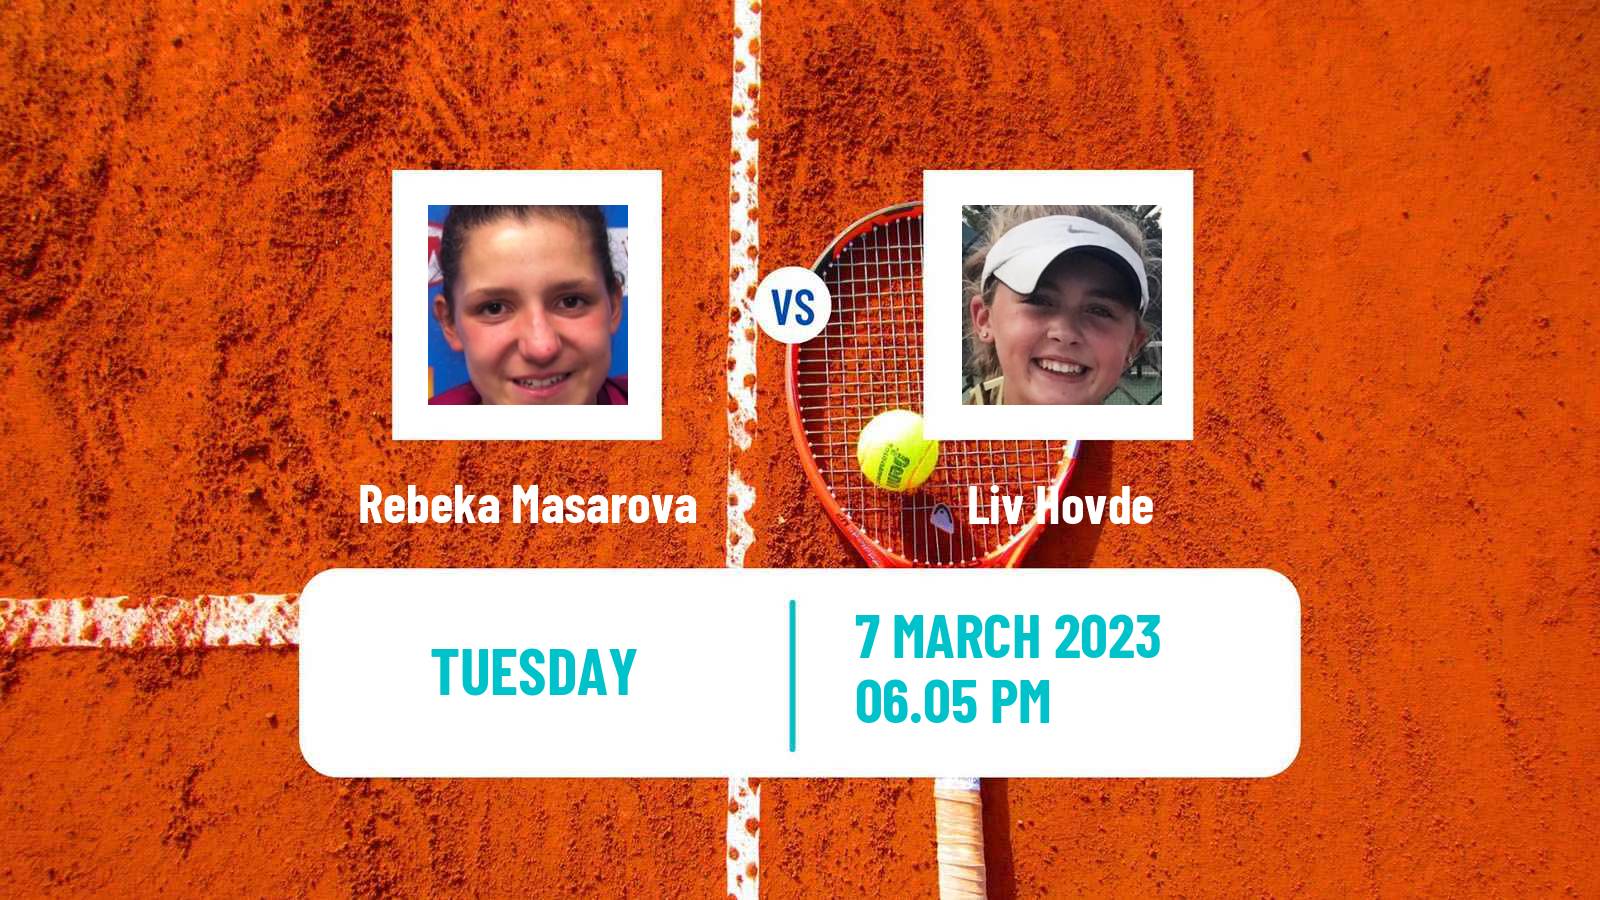 Tennis WTA Indian Wells Rebeka Masarova - Liv Hovde